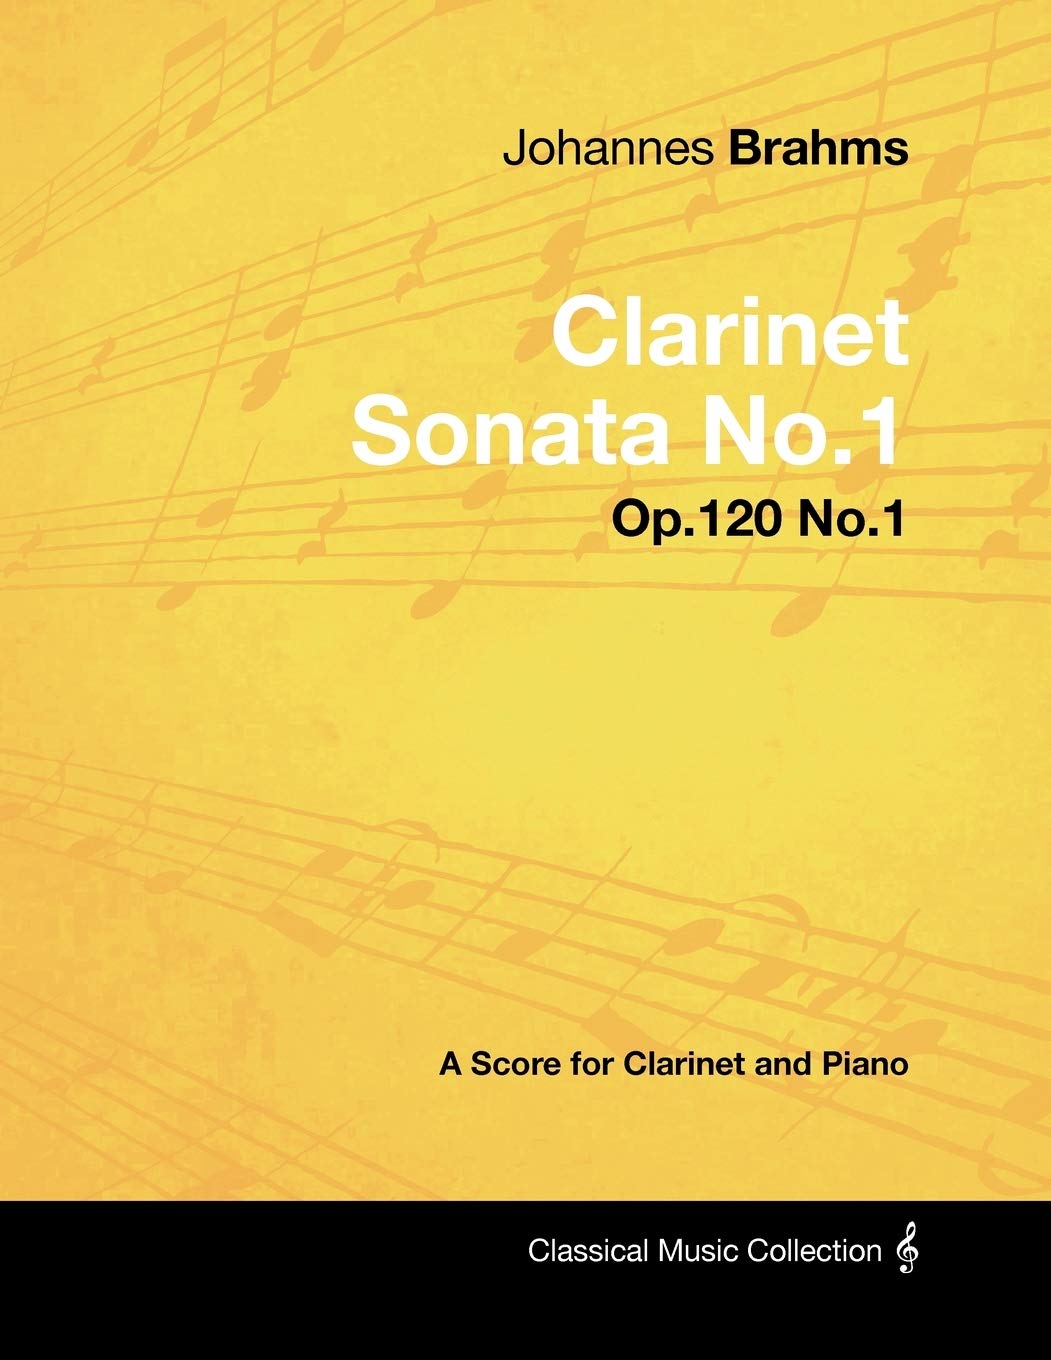 Sonate op.120 No.1 Johannes Brahms